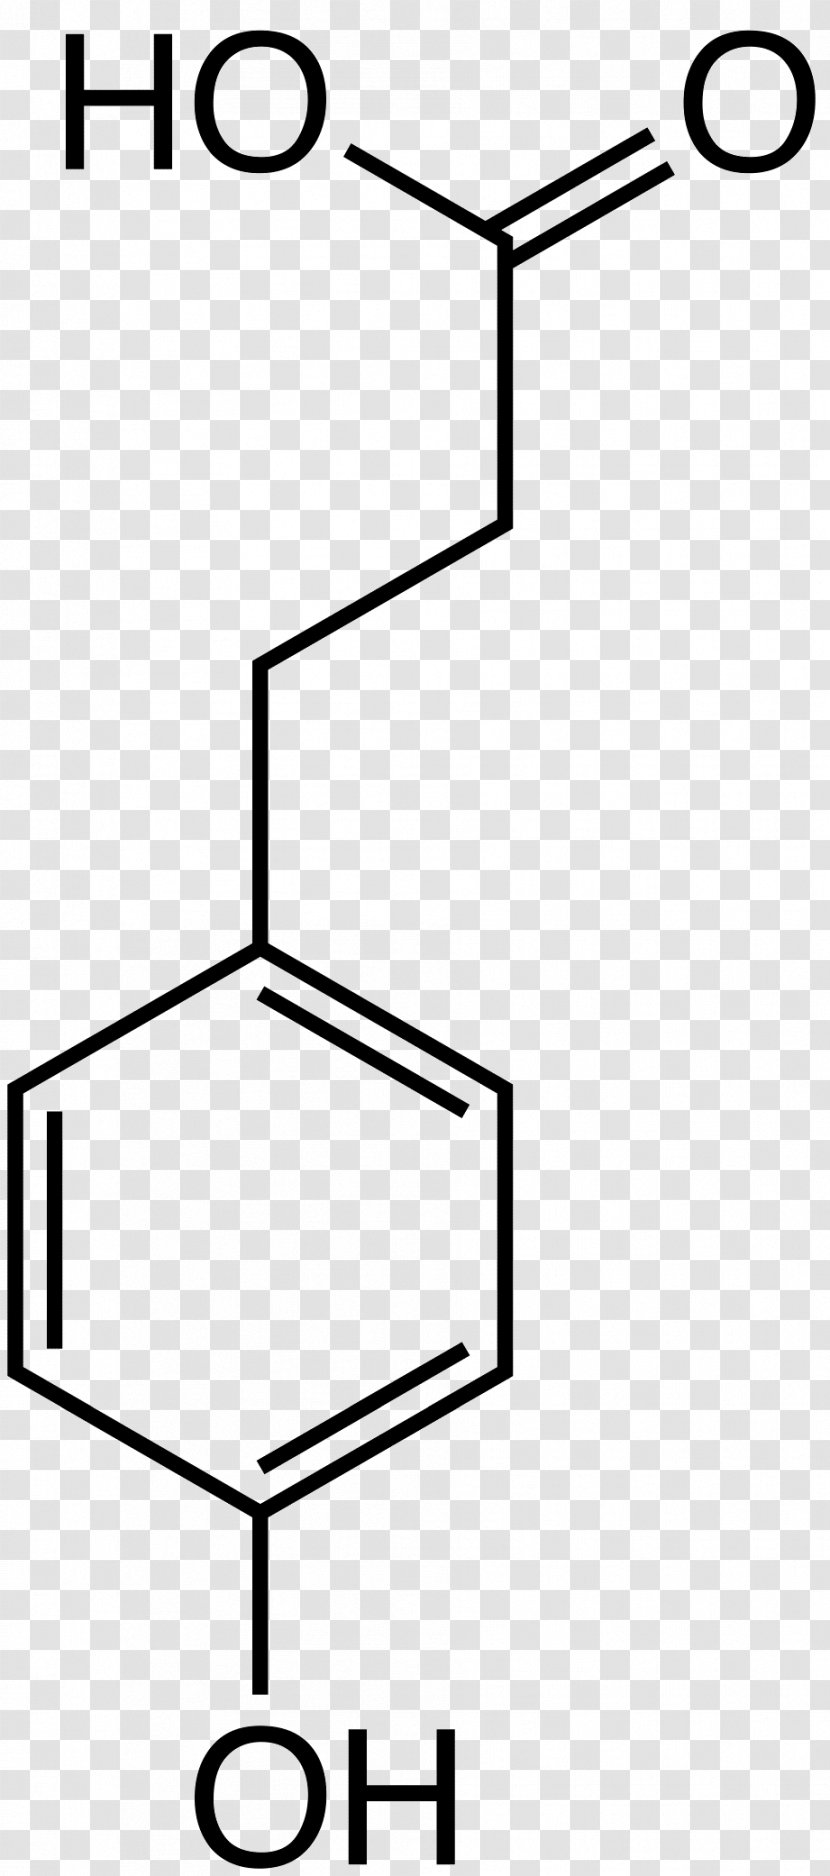 Coniferyl Alcohol Molecule Ferulic Acid 4-Hydroxybenzoic - Material - STANDARDS Transparent PNG